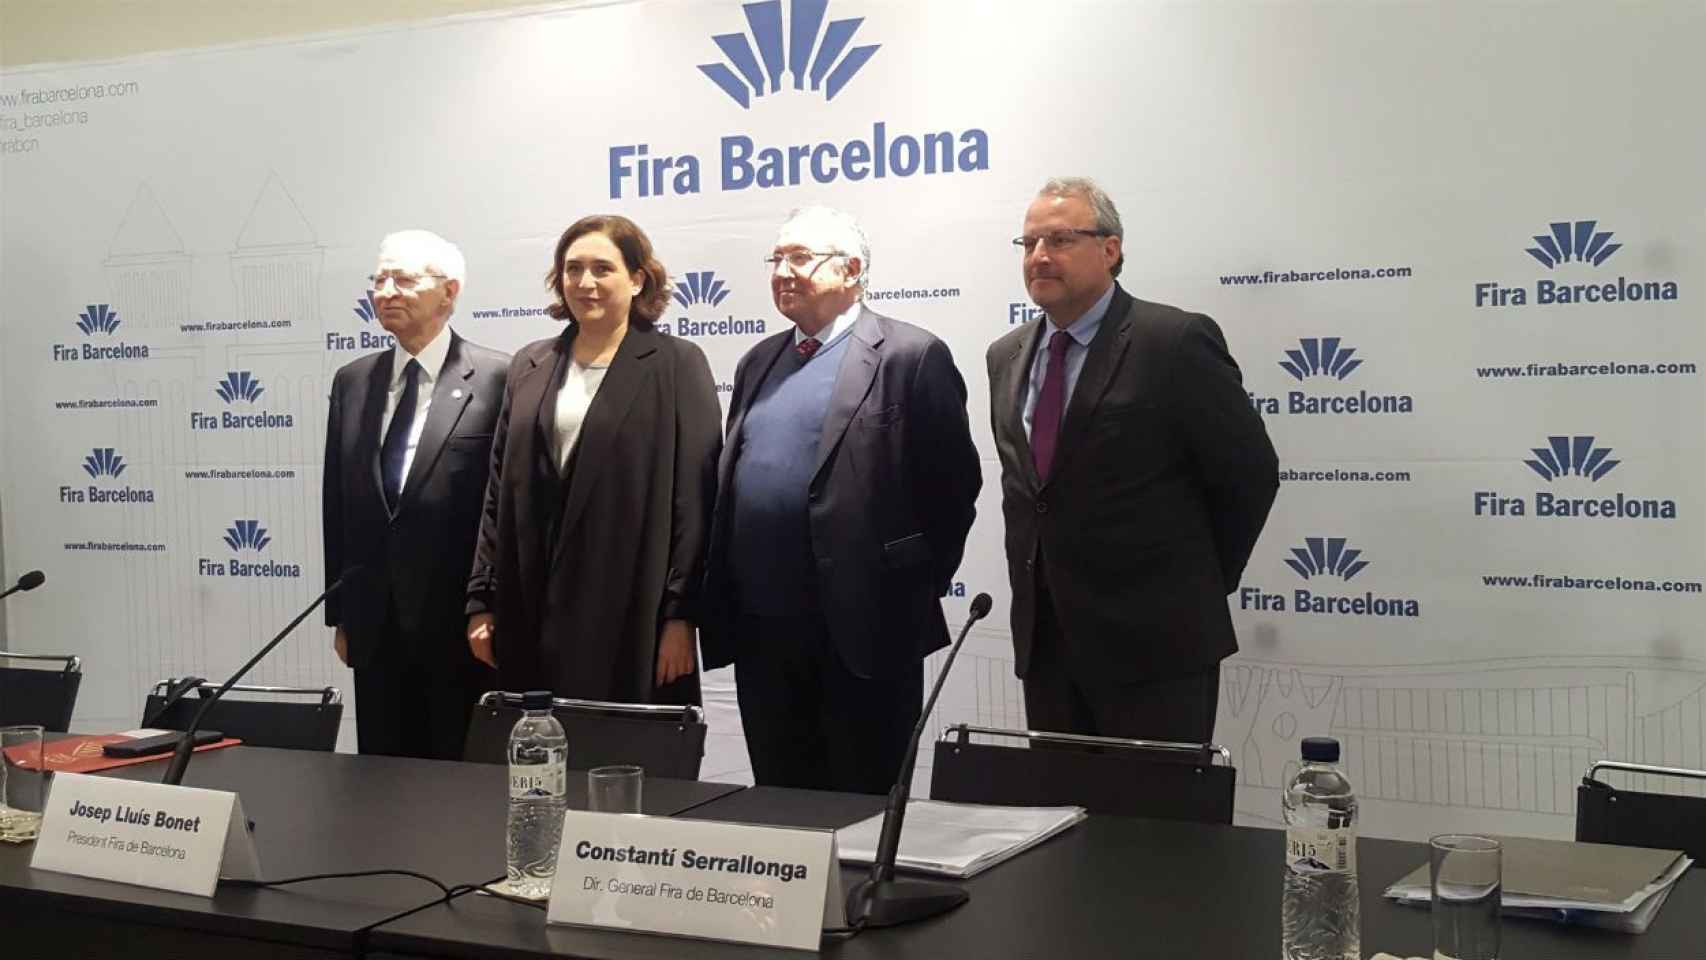 De izquierda a derecha, Valls, Colau, Bonet y Serrallonga, durante la rueda de prensa / EUROPA PRESS